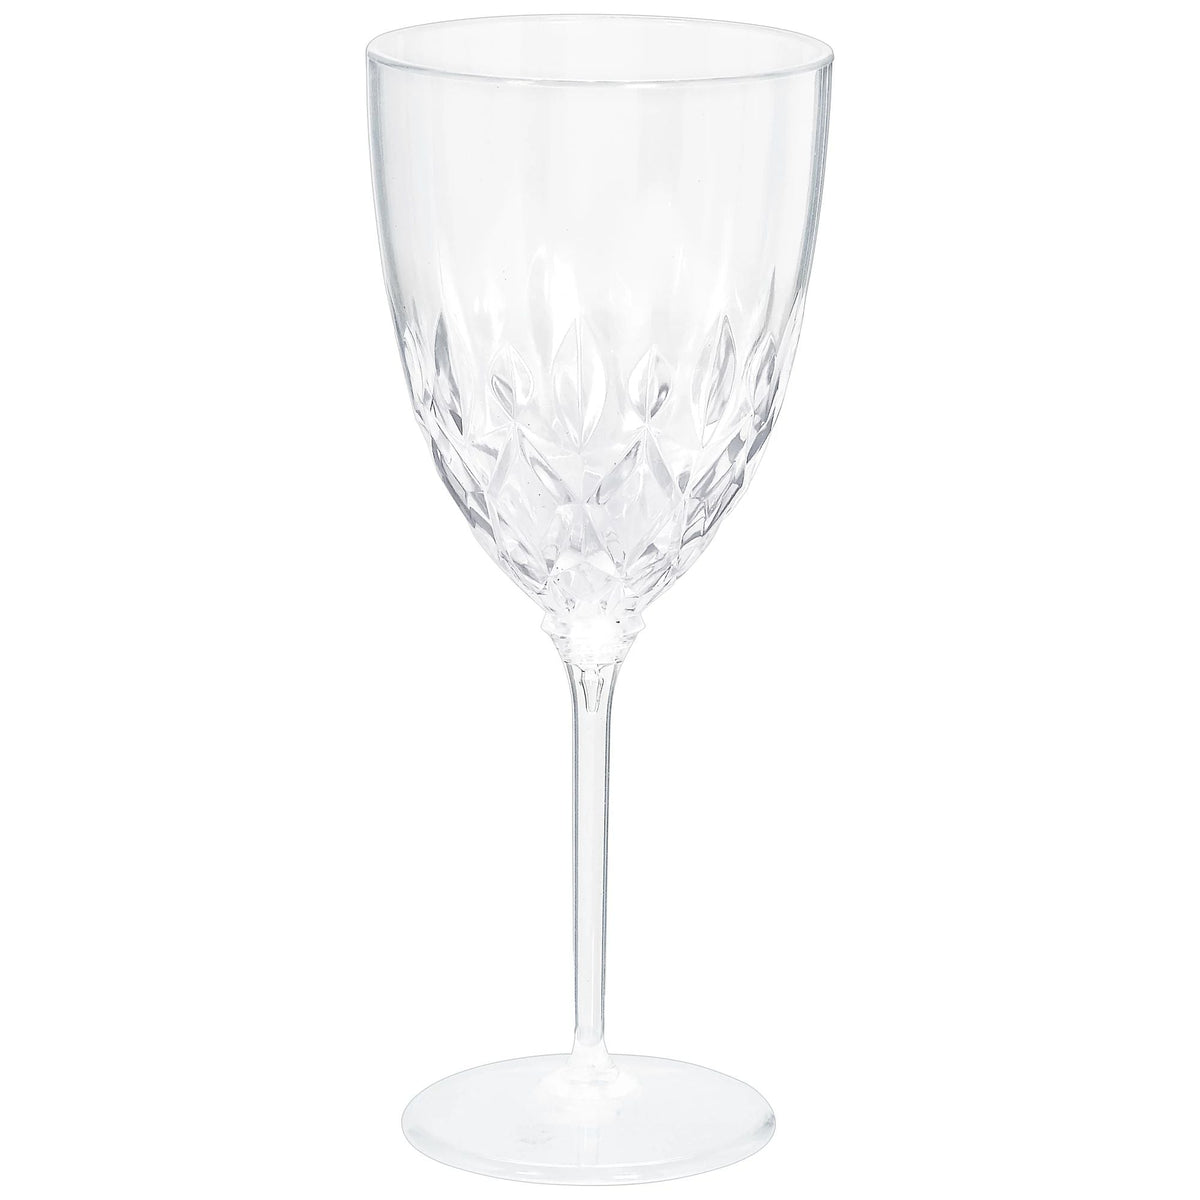 AMSCAN CA Disposable-Plasticware Clear Premium Crystal Look PET Plastic Wine Goblet, 1 Count